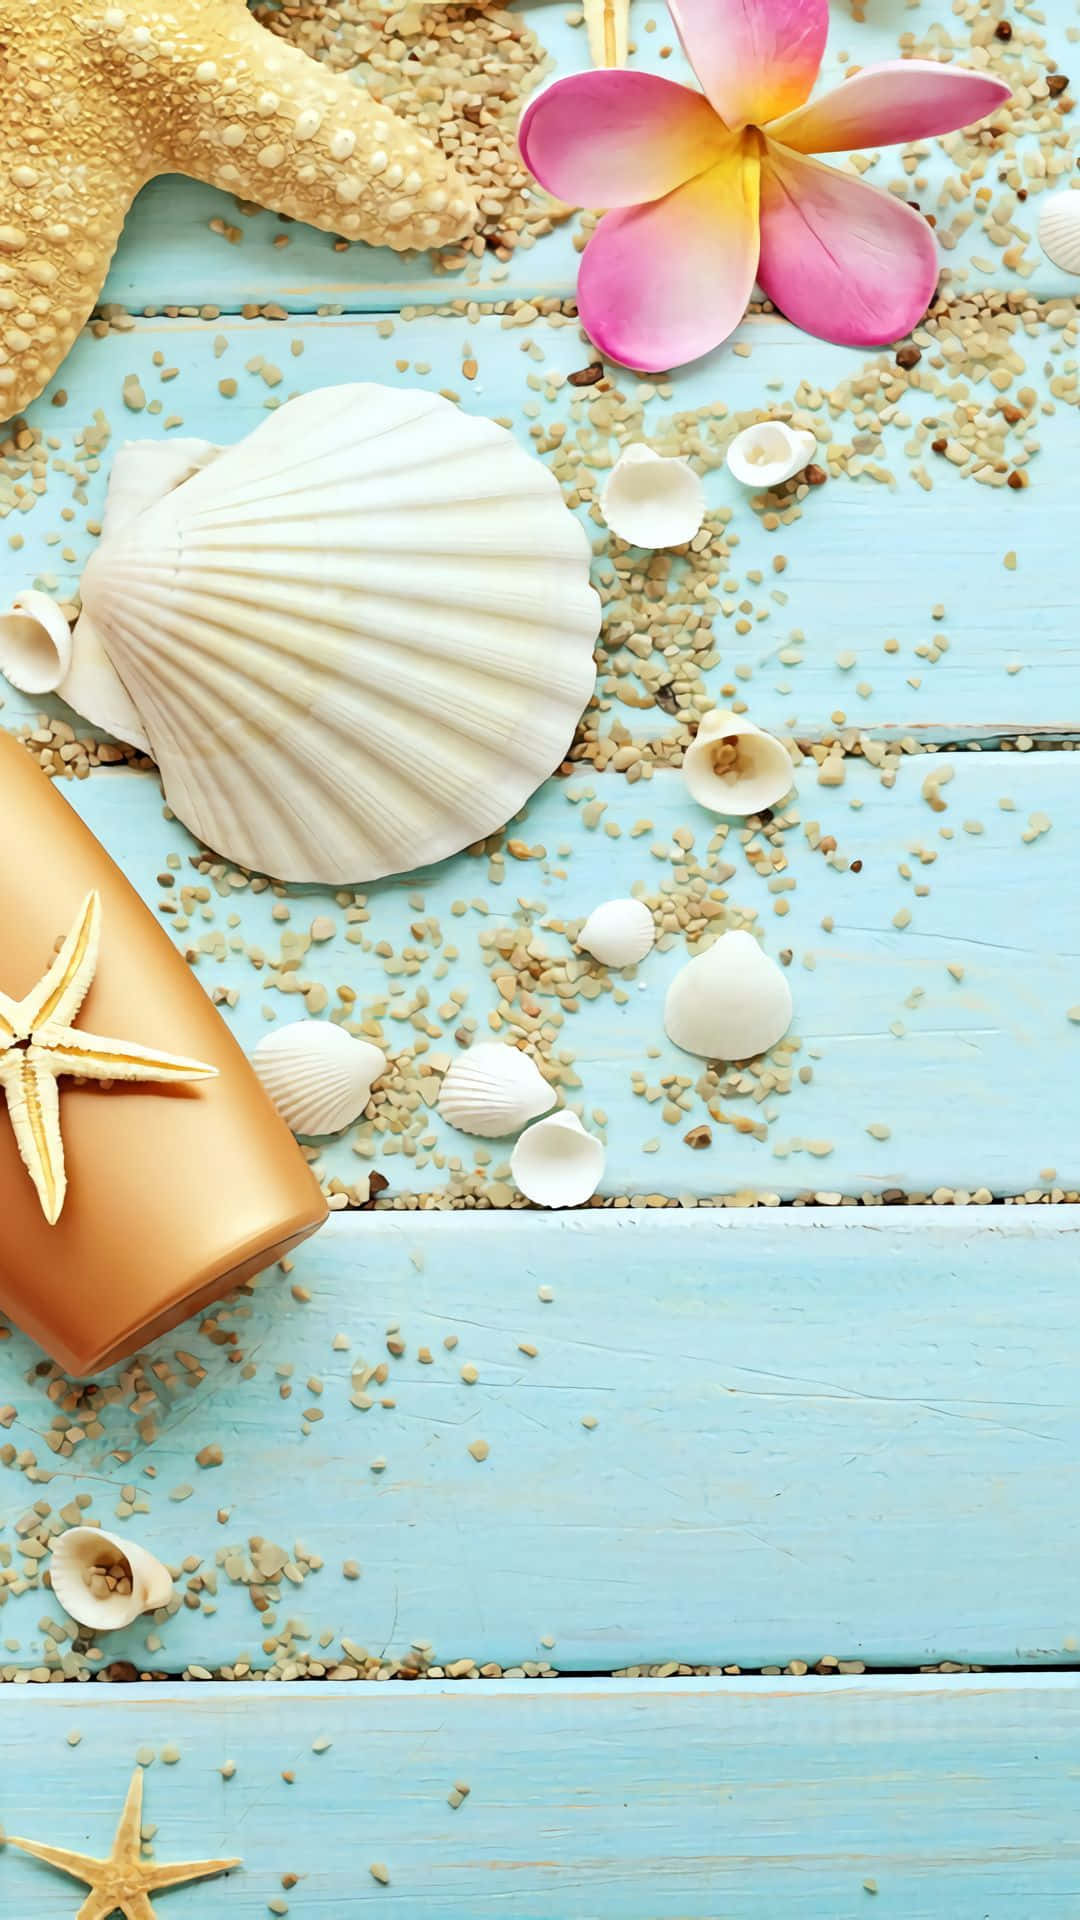 A beautiful seashell on a white beach.